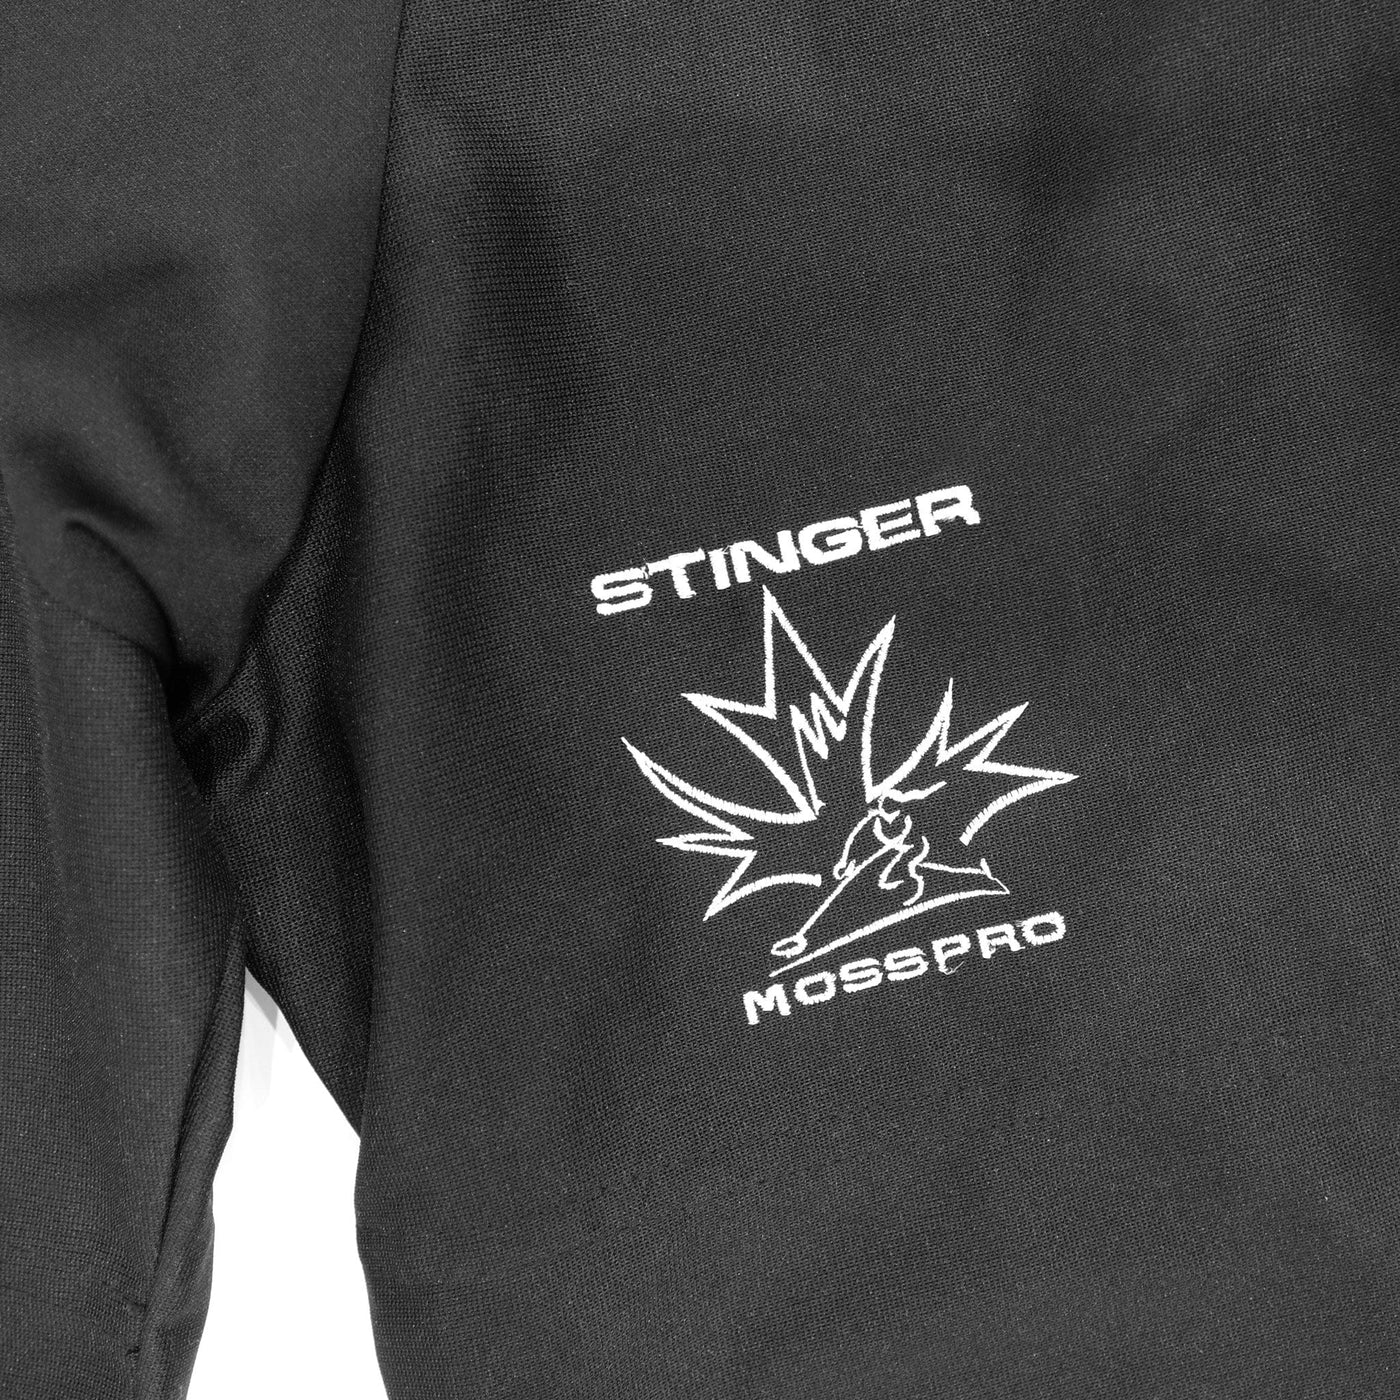 Stinger Mosspro Senior Ringette Pant - TheHockeyShop.com